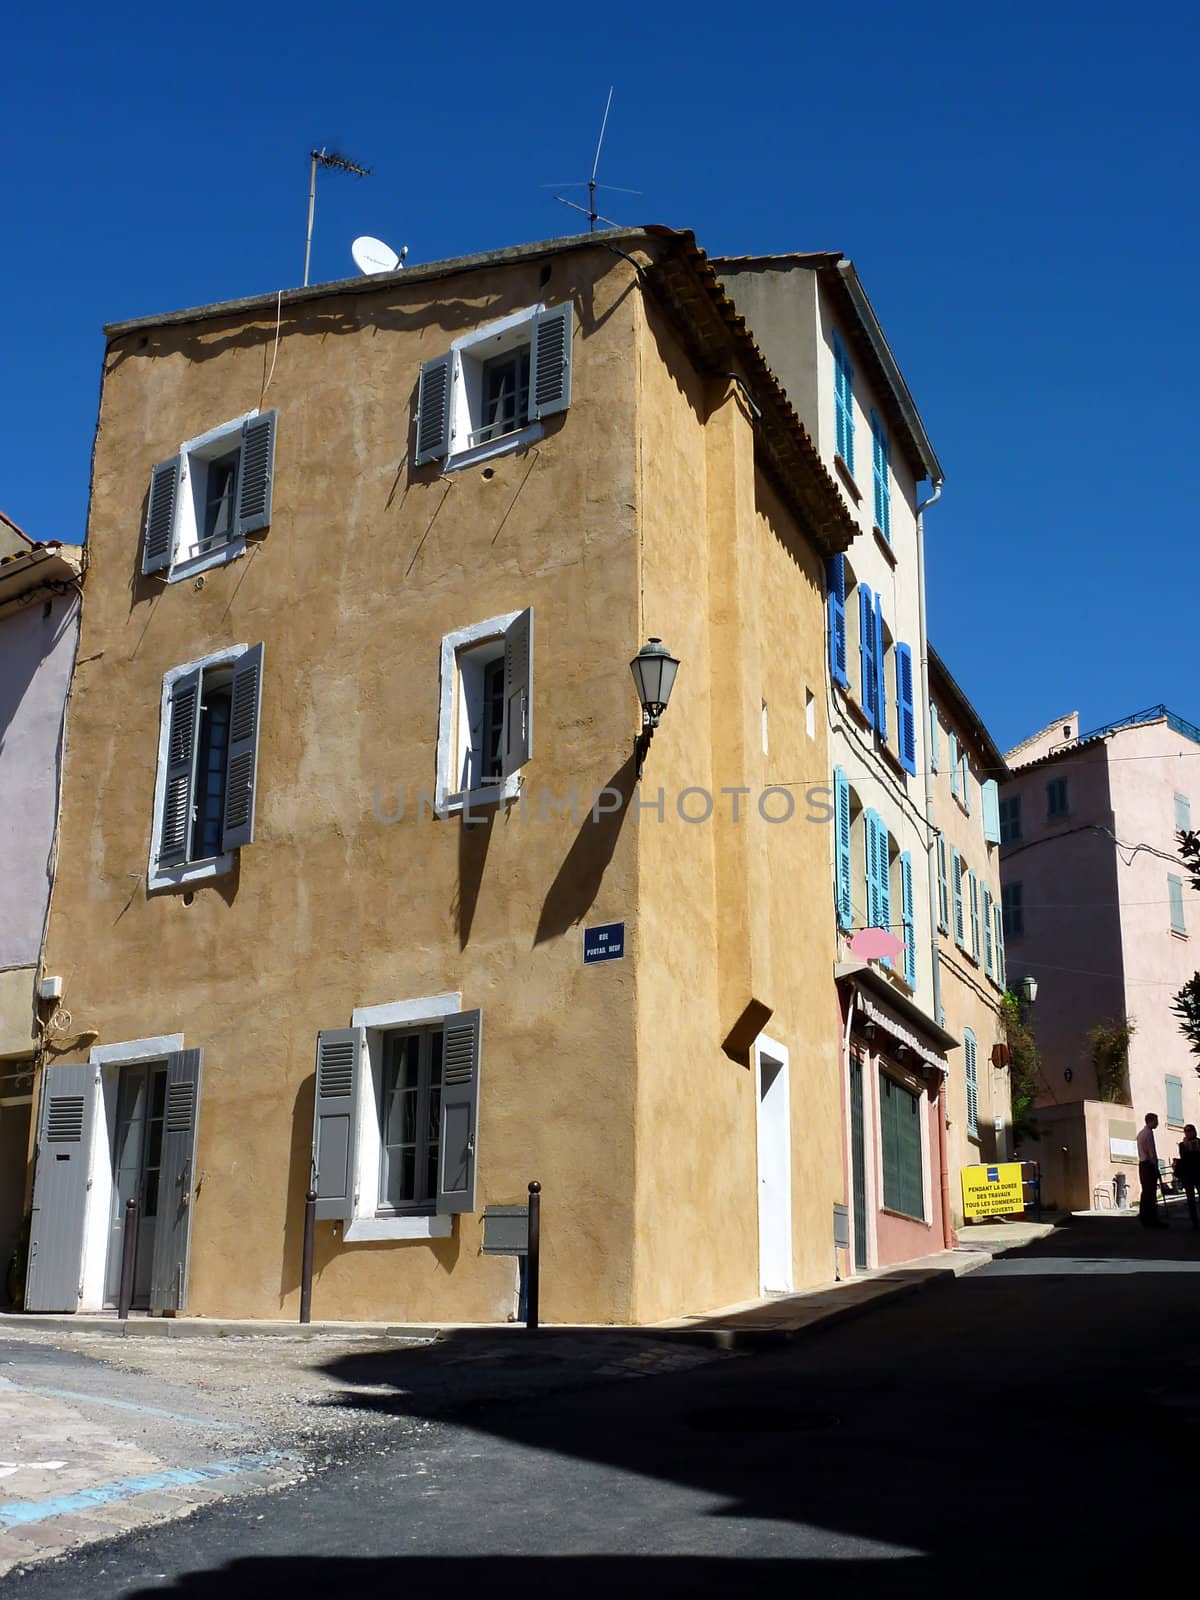 House at Saint-Tropez, France by Elenaphotos21